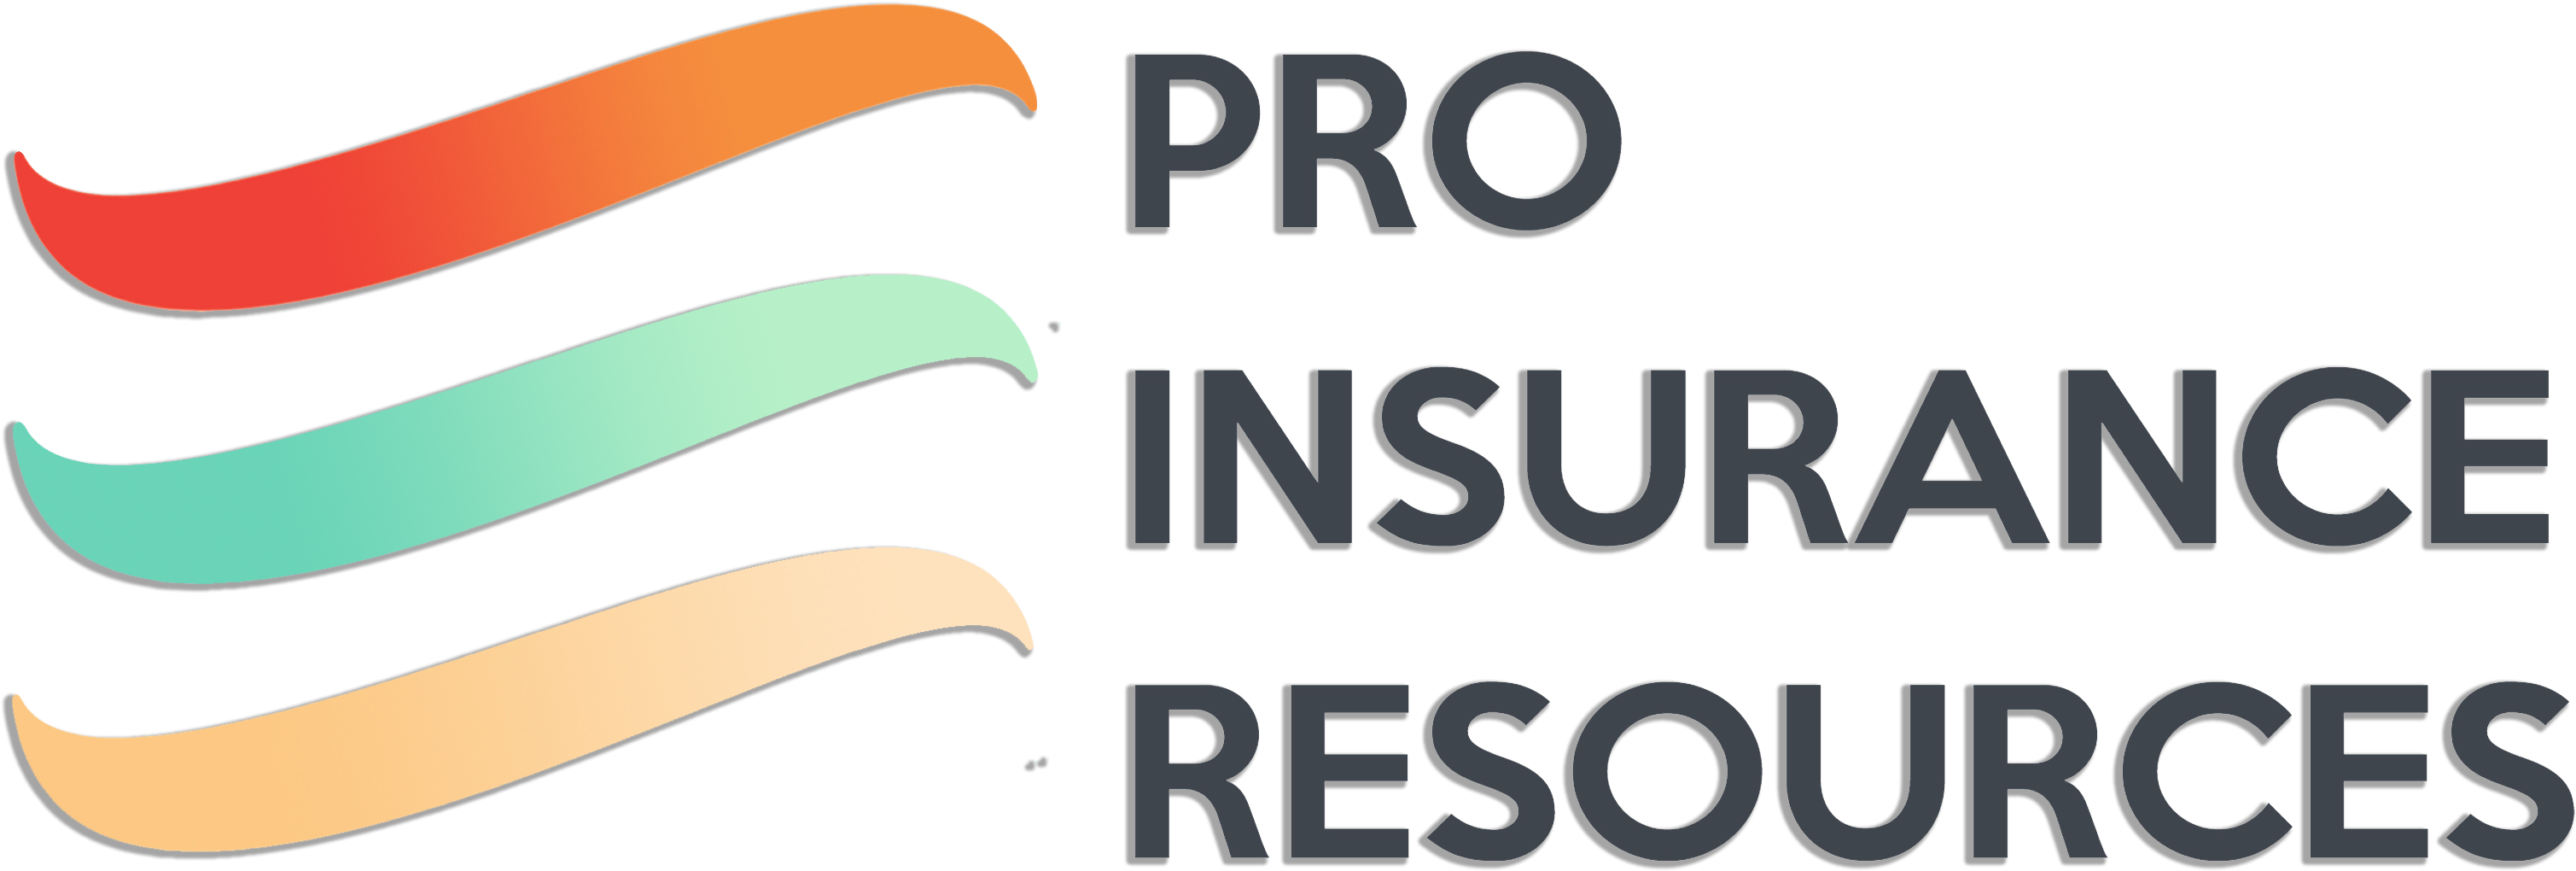 Pro Insurance Resources Medicare - Insurance Broker (3134x1449), Png Download